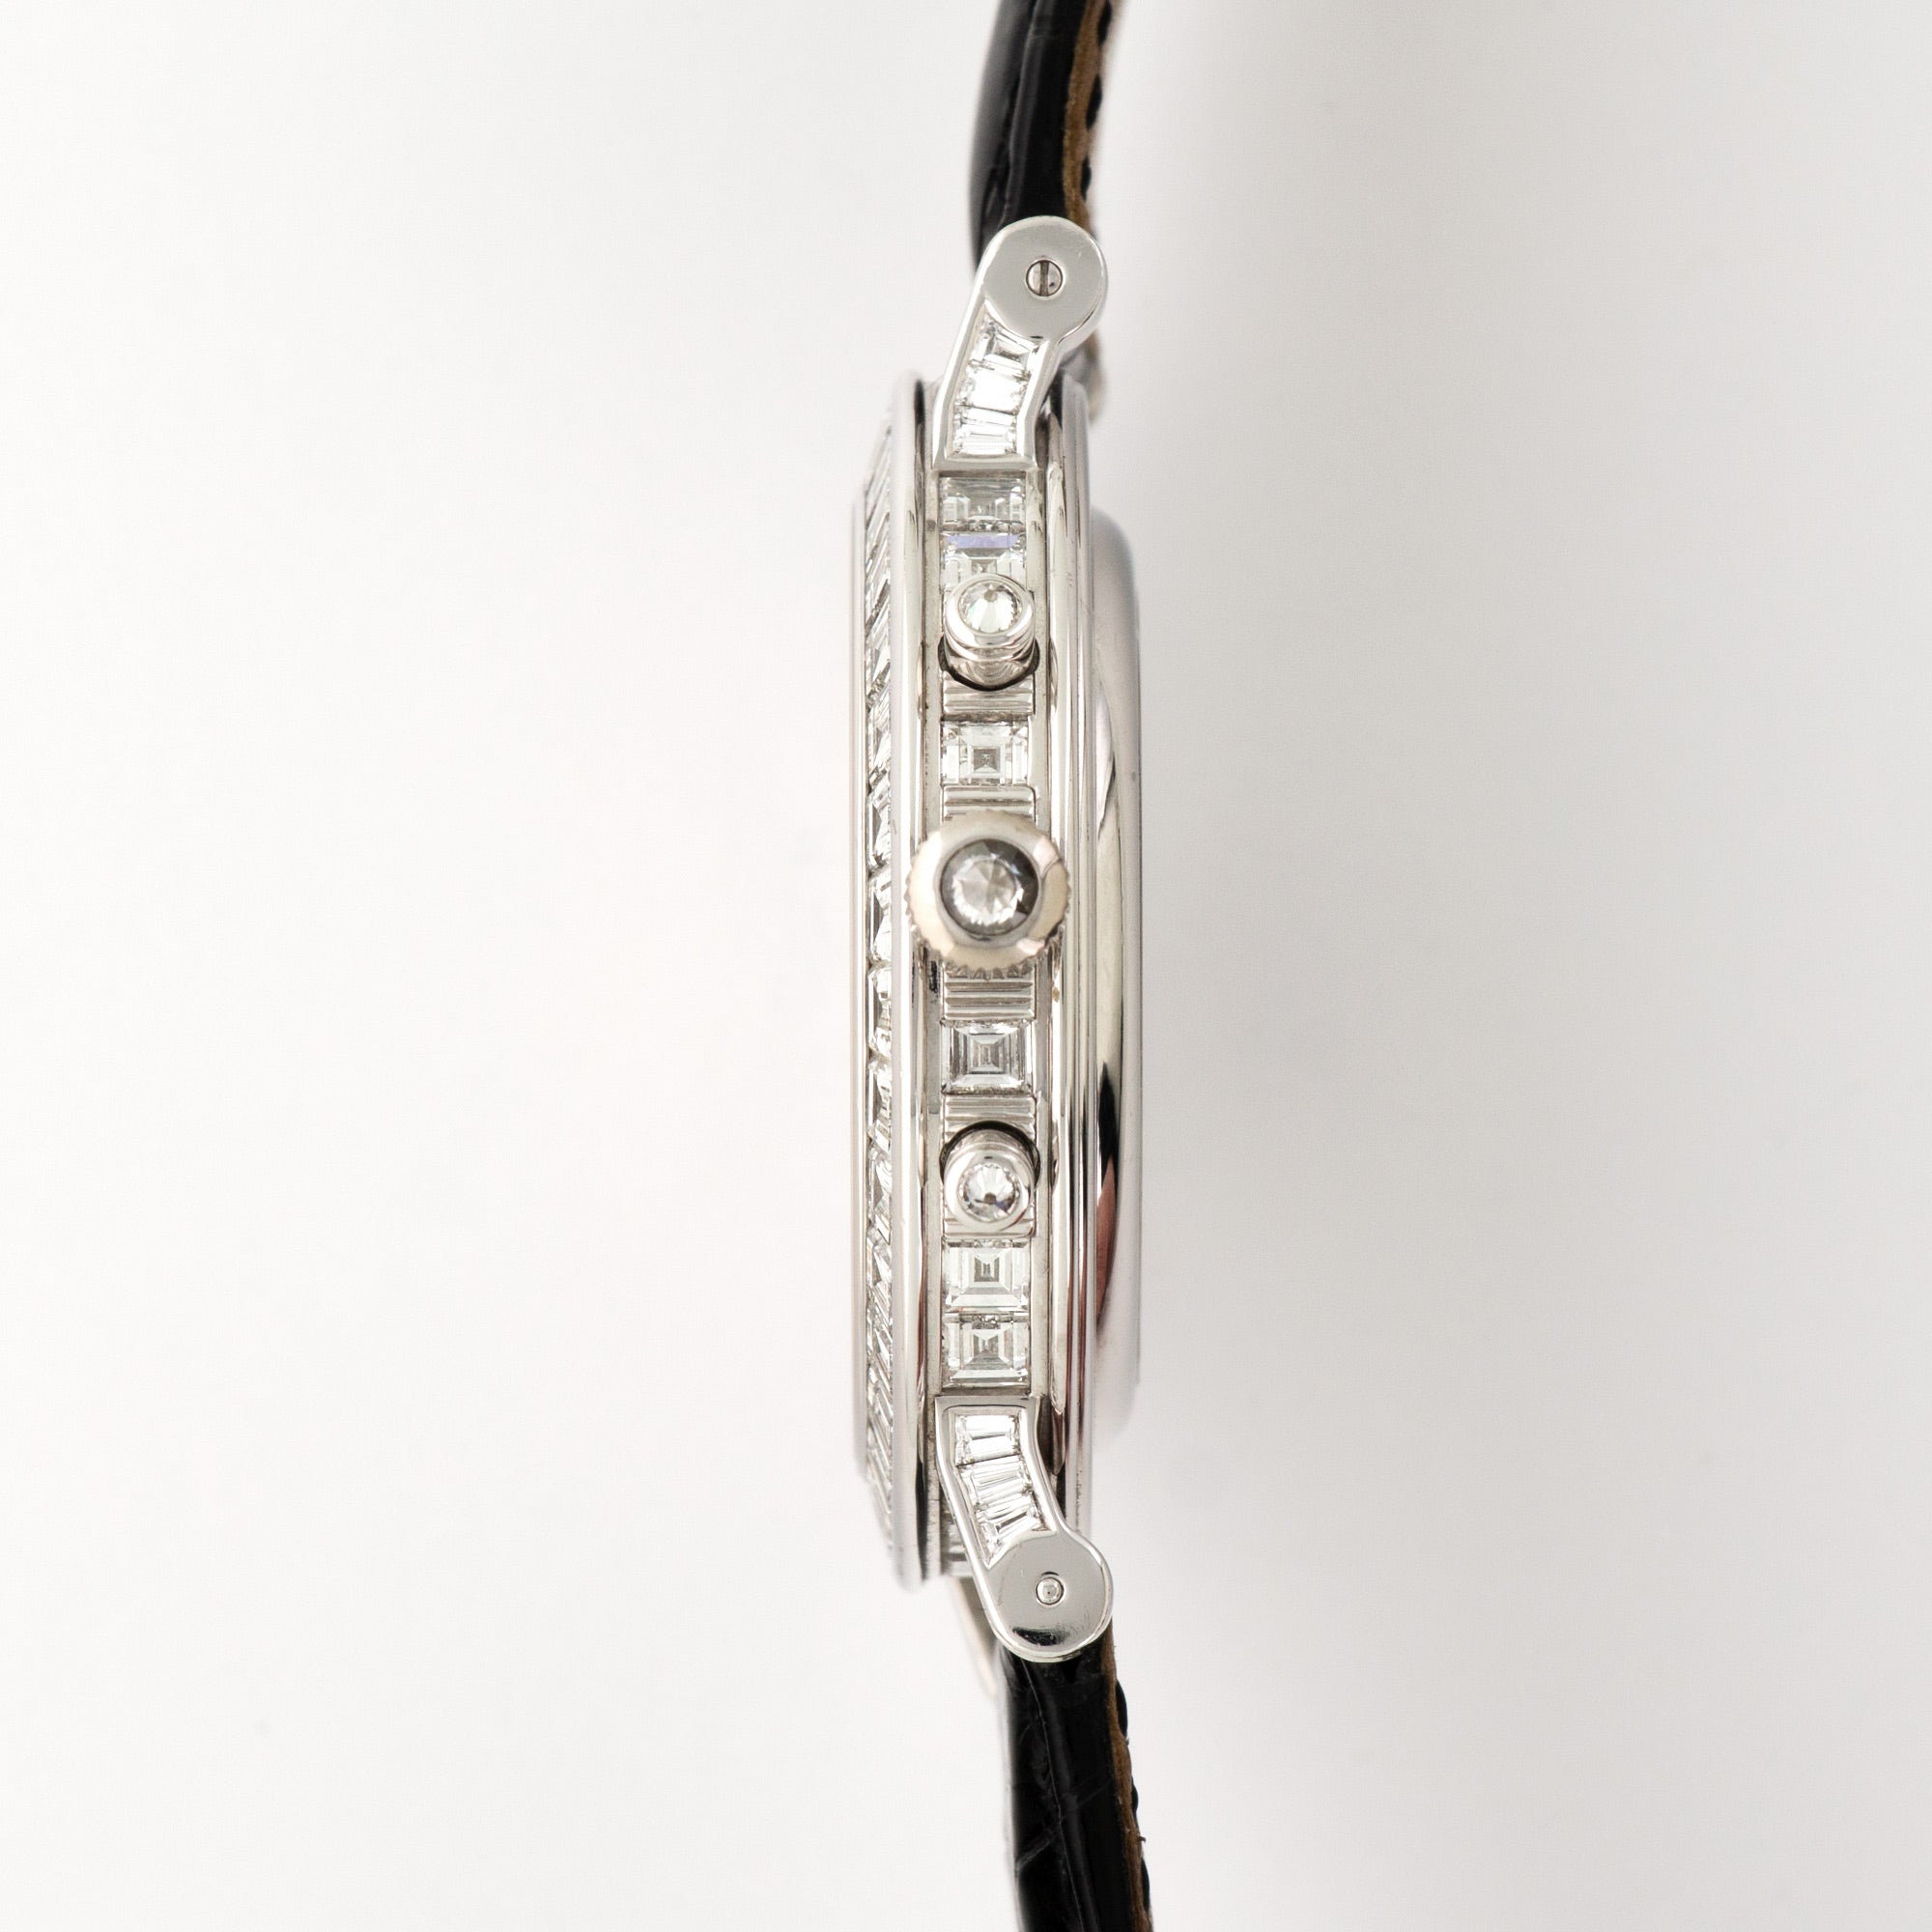 Breguet - Breguet White Gold Chronograph Skeleton Baguette Diamond Watch - The Keystone Watches